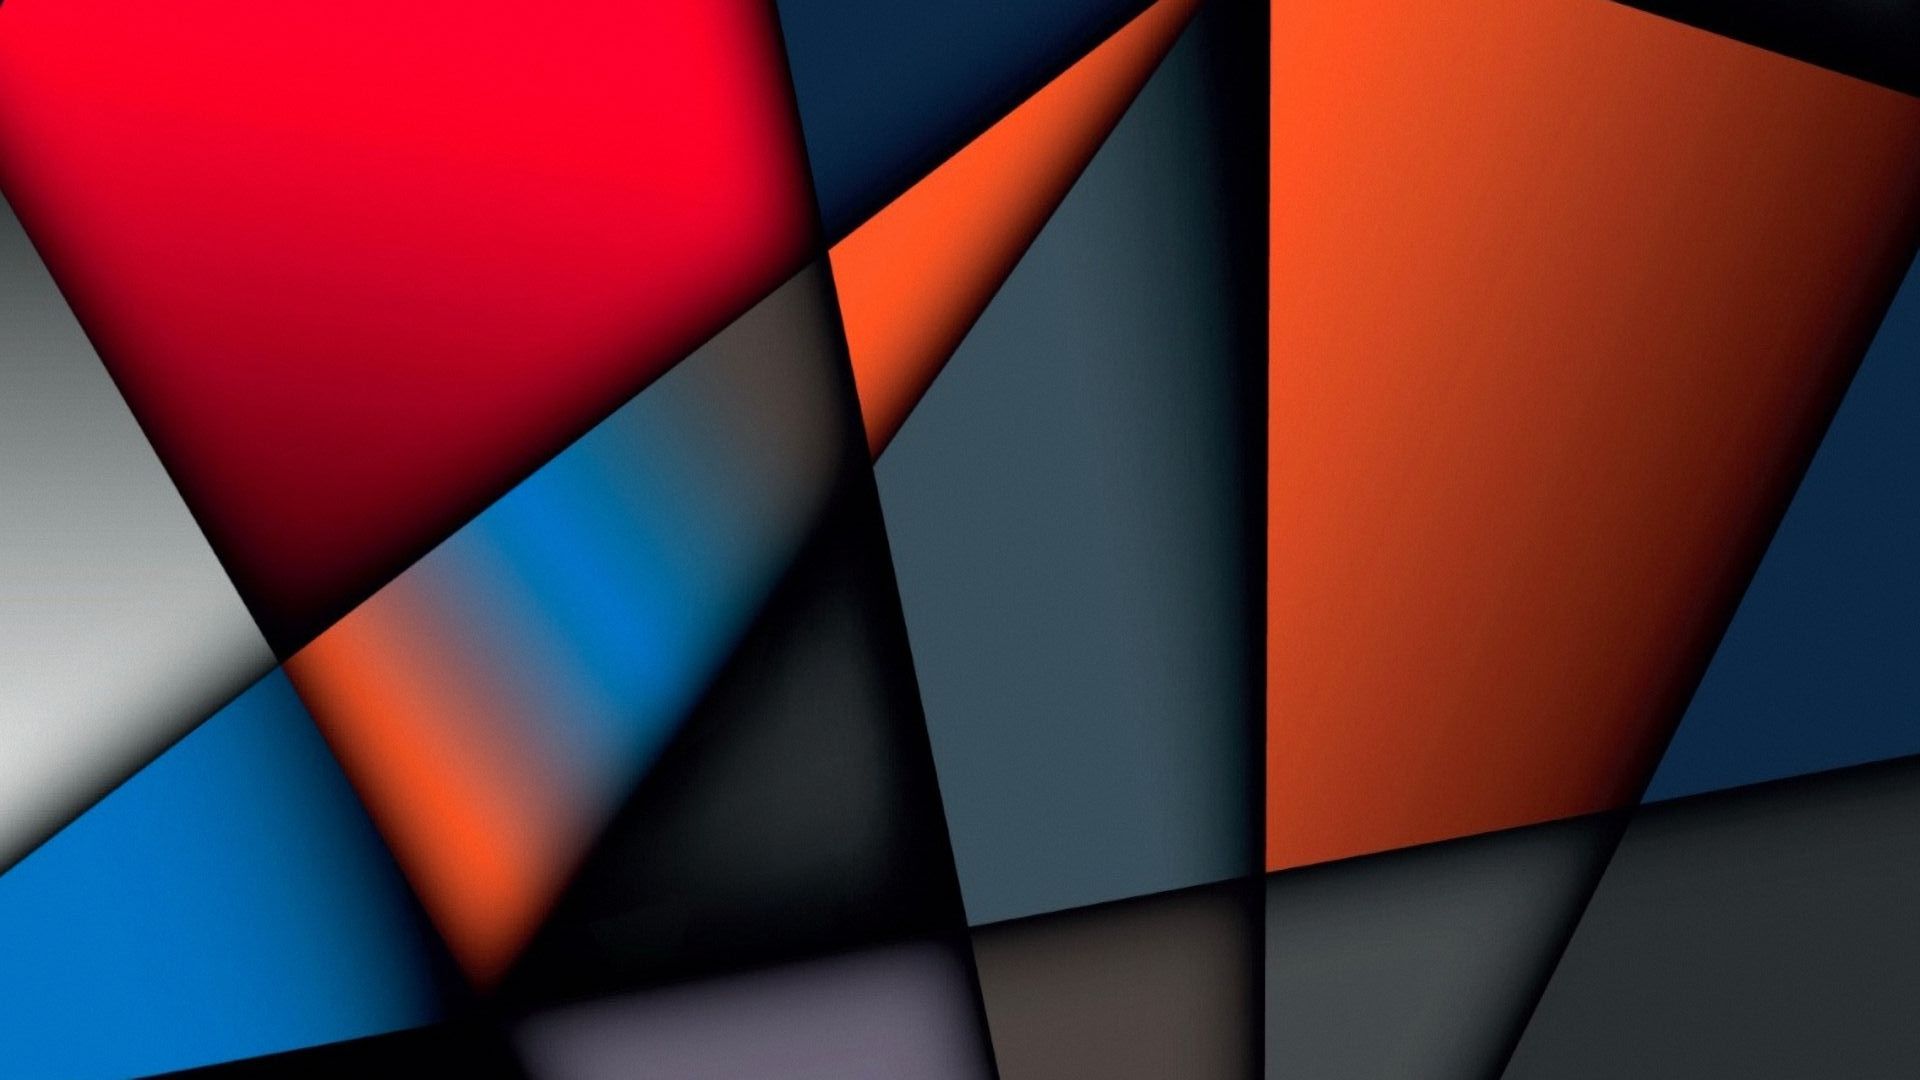 Abstract desktop wallpaper